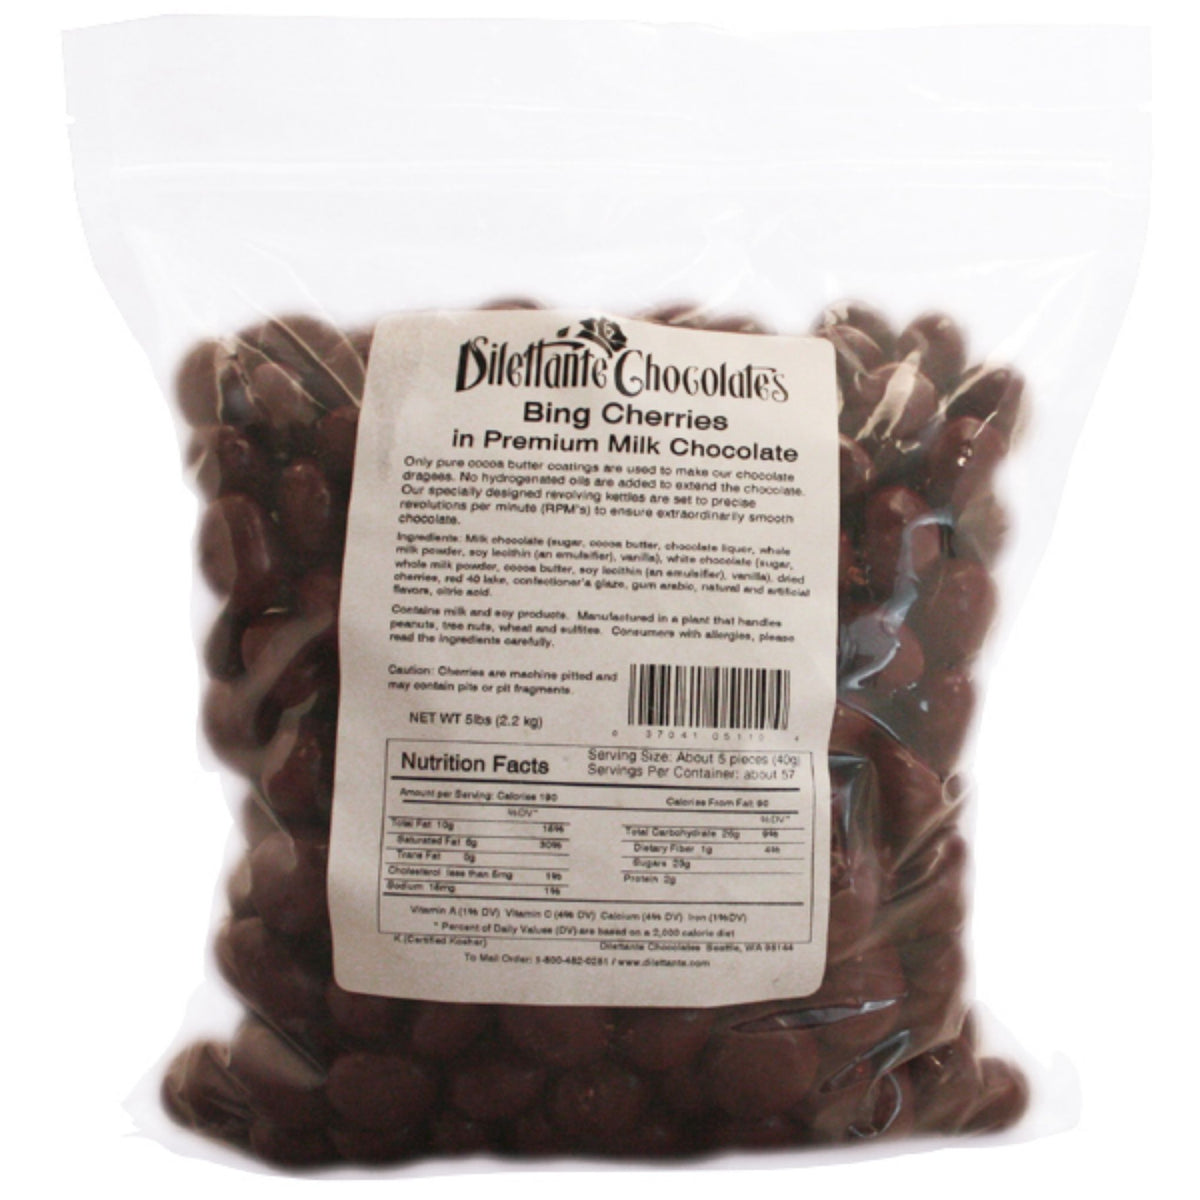 Dilettante Chocolates Bing Cherries in Premium Milk Chocolate in a Large 5-Pound Bulk Bag